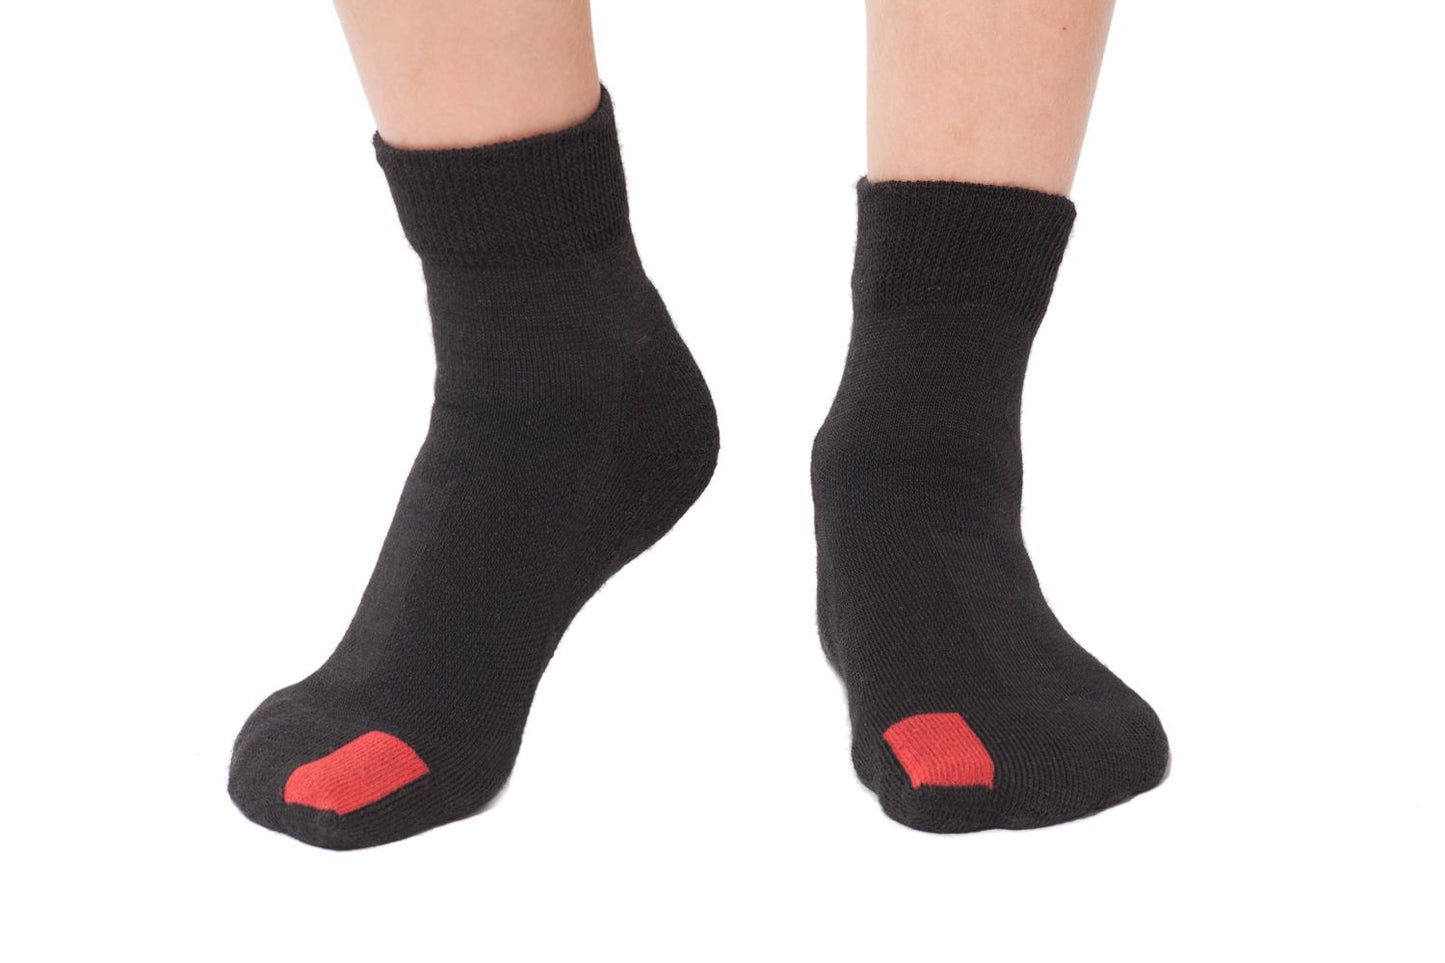 Plus12 - Calcetines barefoot cortos - Algodón - Negro – Cacles Barefoot